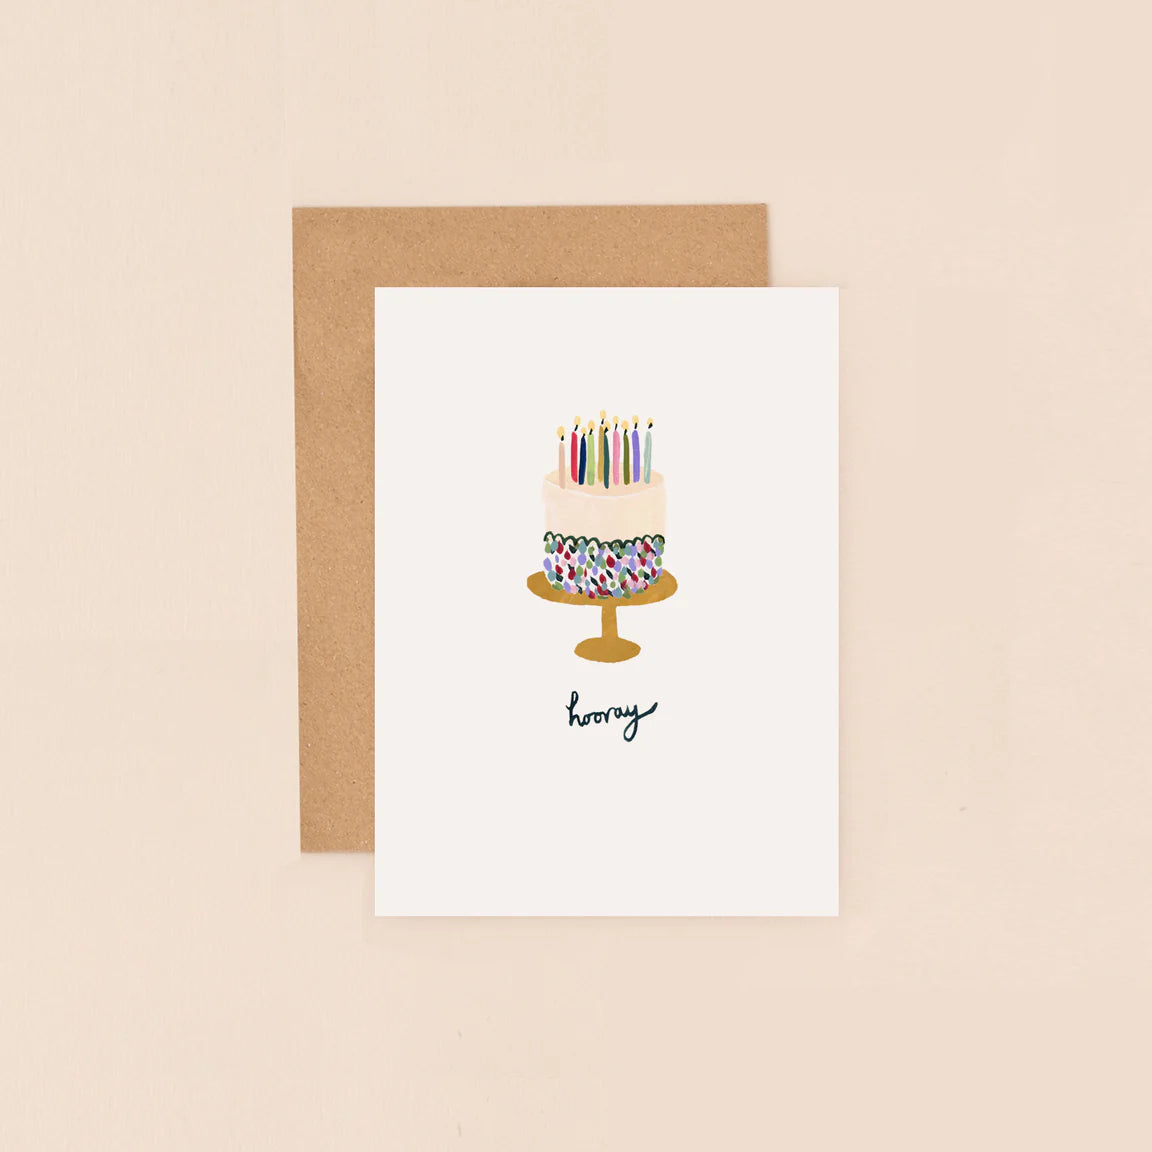 Fabulous Greeting Cards Louise Mulgrew Mini Card Cake Hooray Card by Weirs of Baggot Street